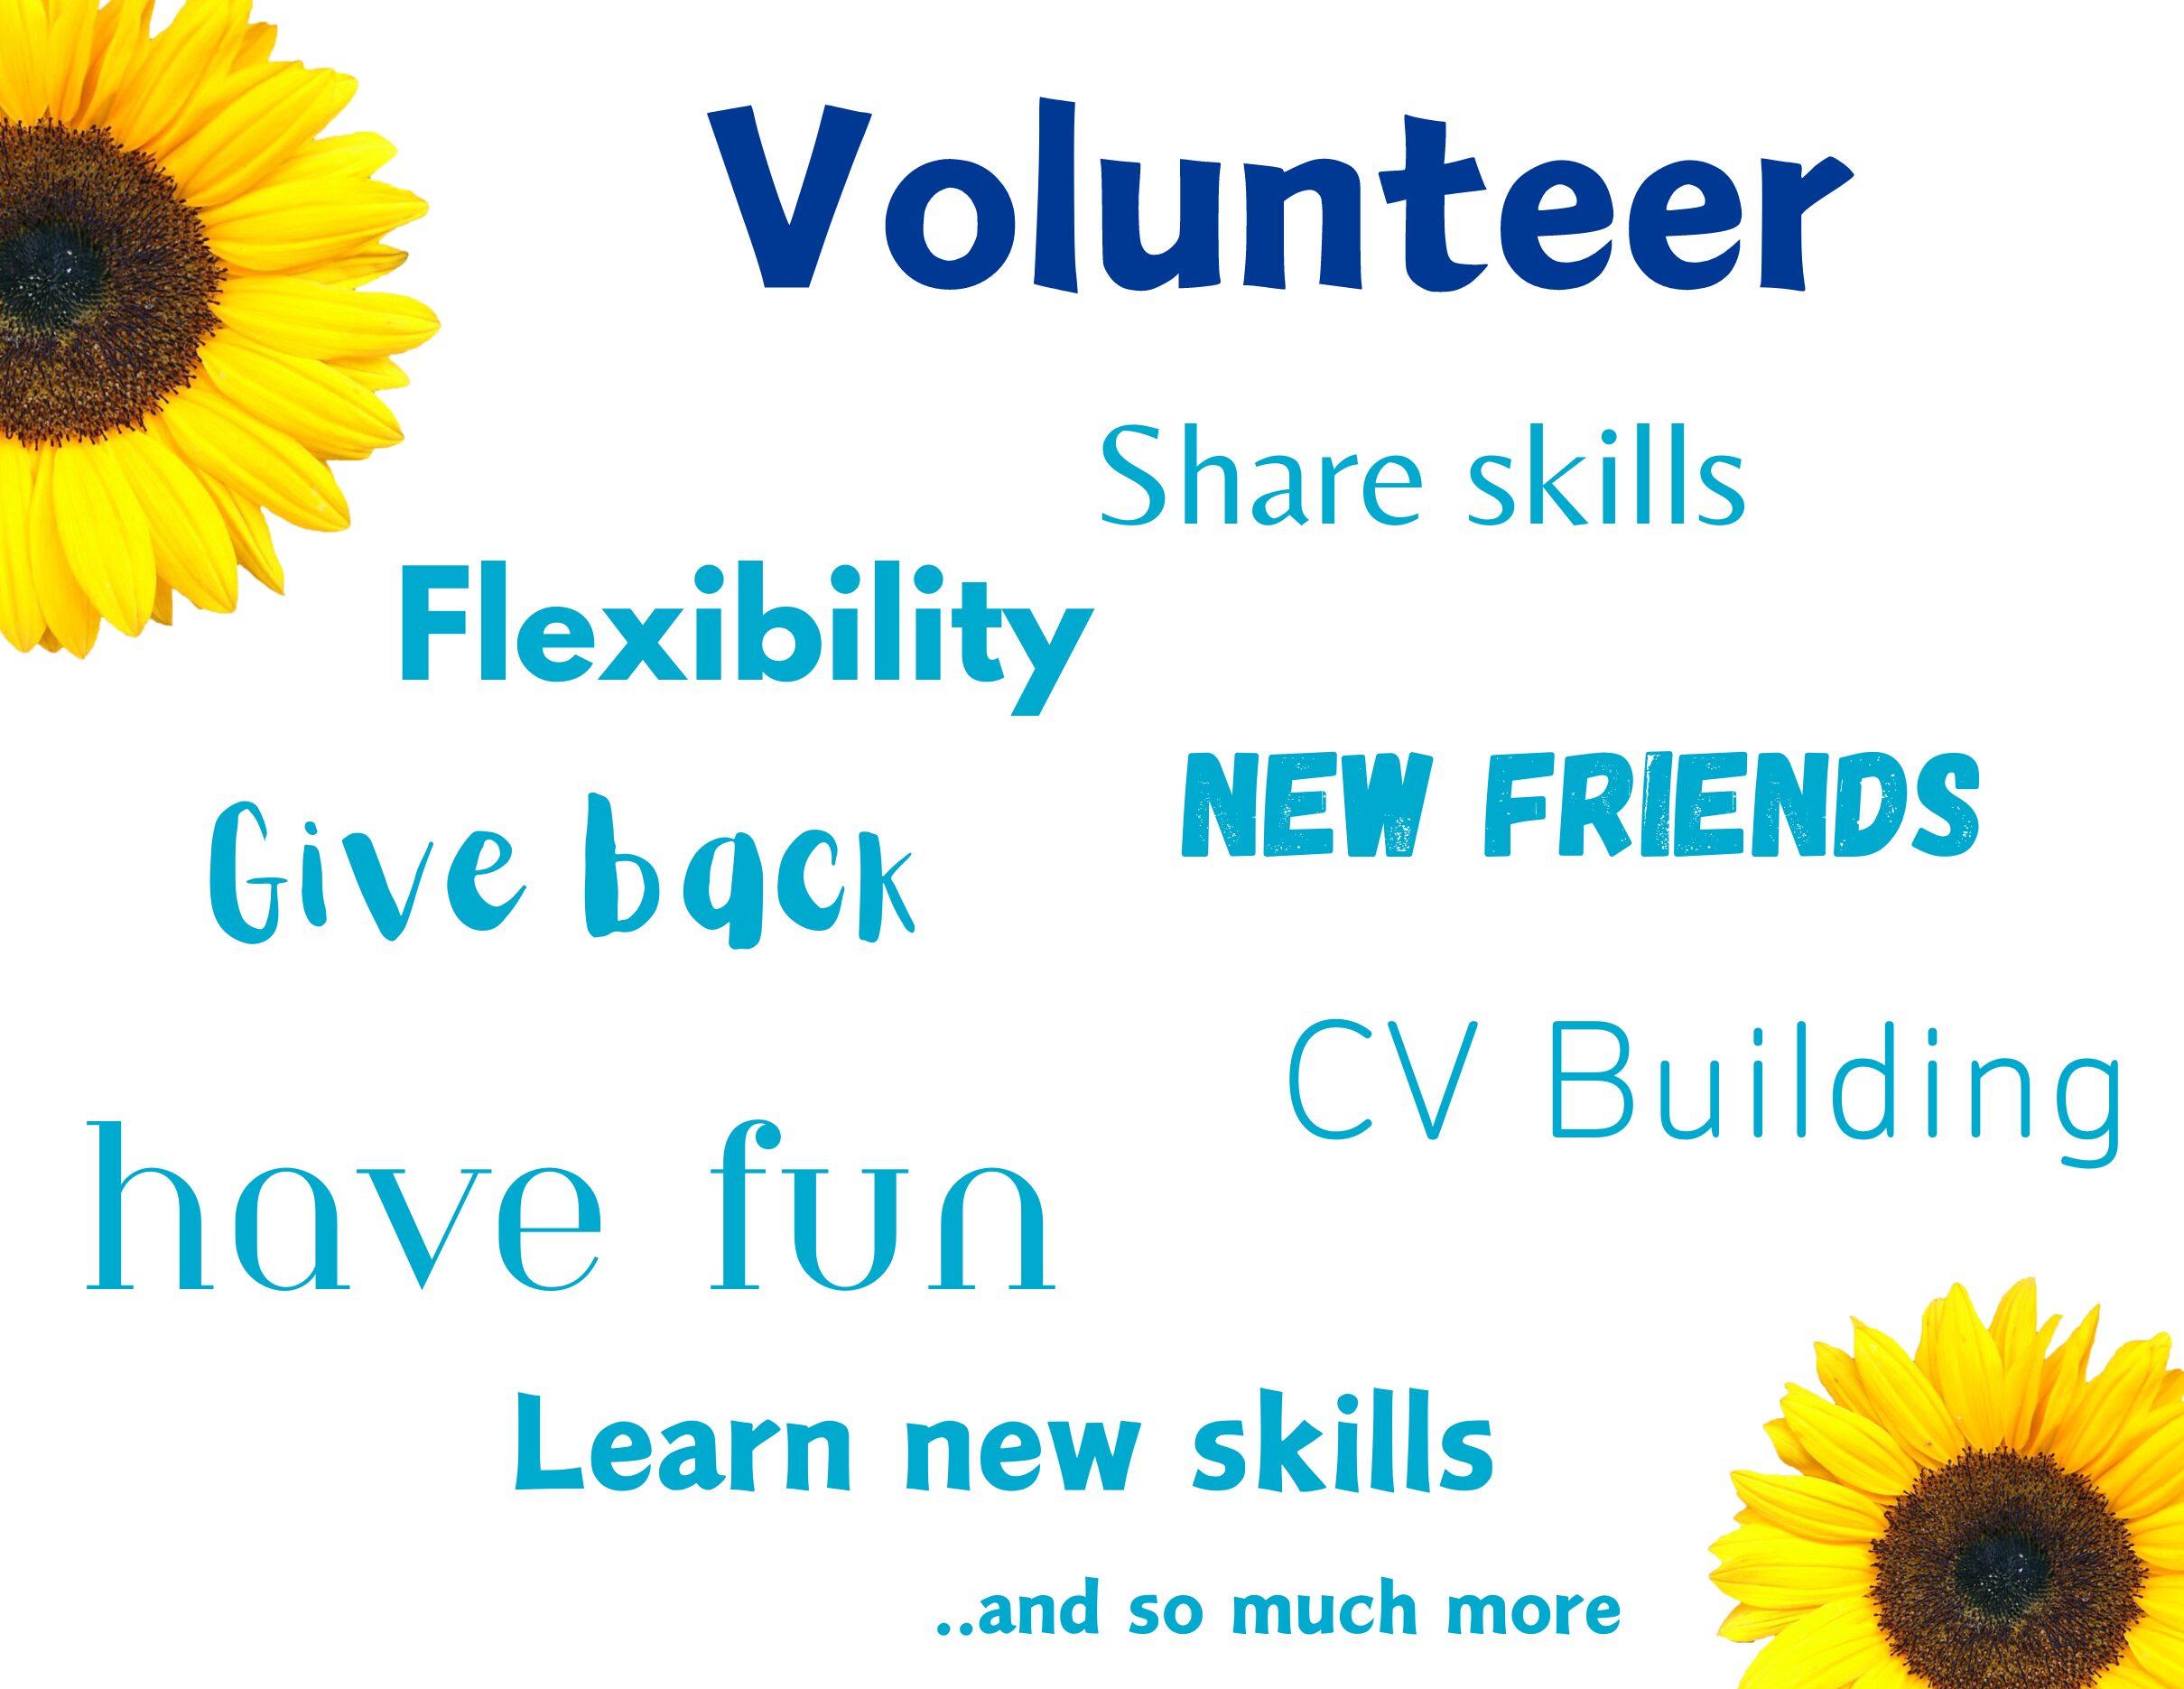 Words associated with Volunteering